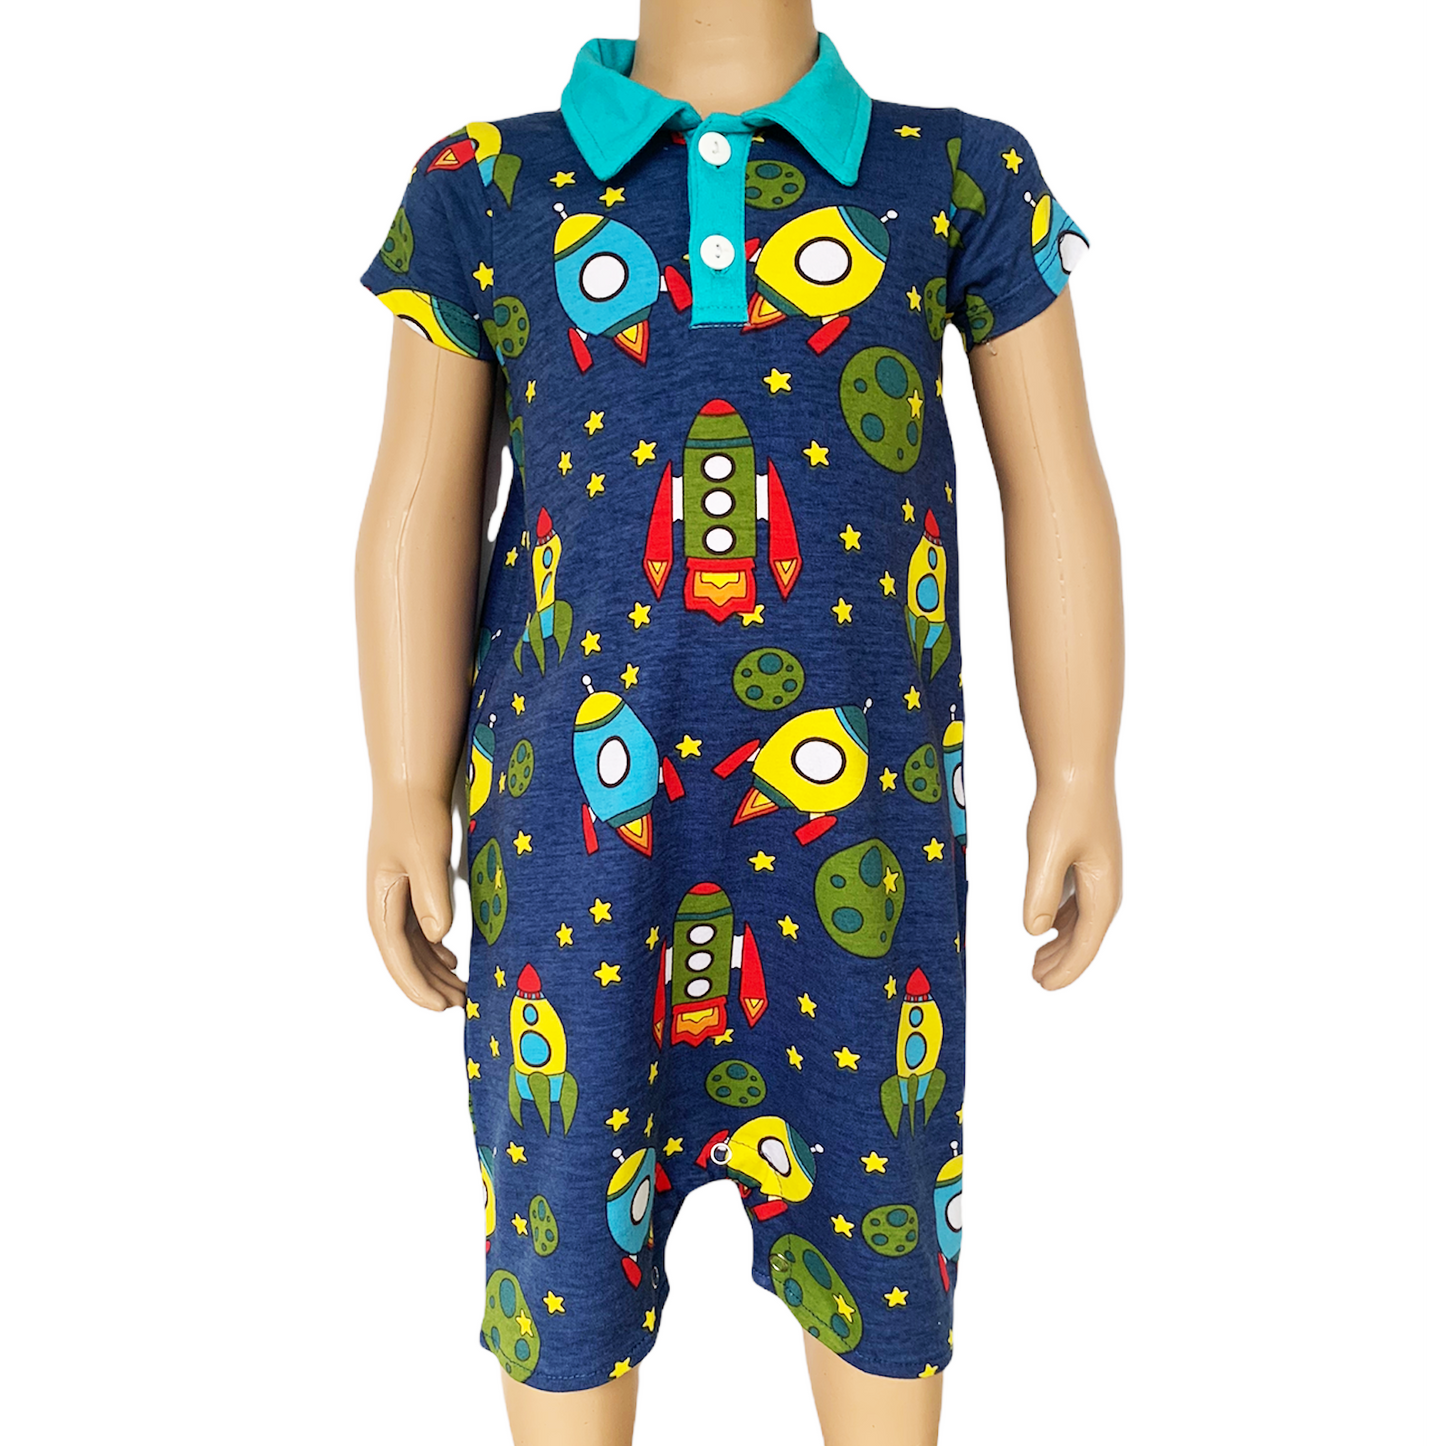 AnnLoren Spaceship short sleeve Collar Baby/Toddler Boys Romper